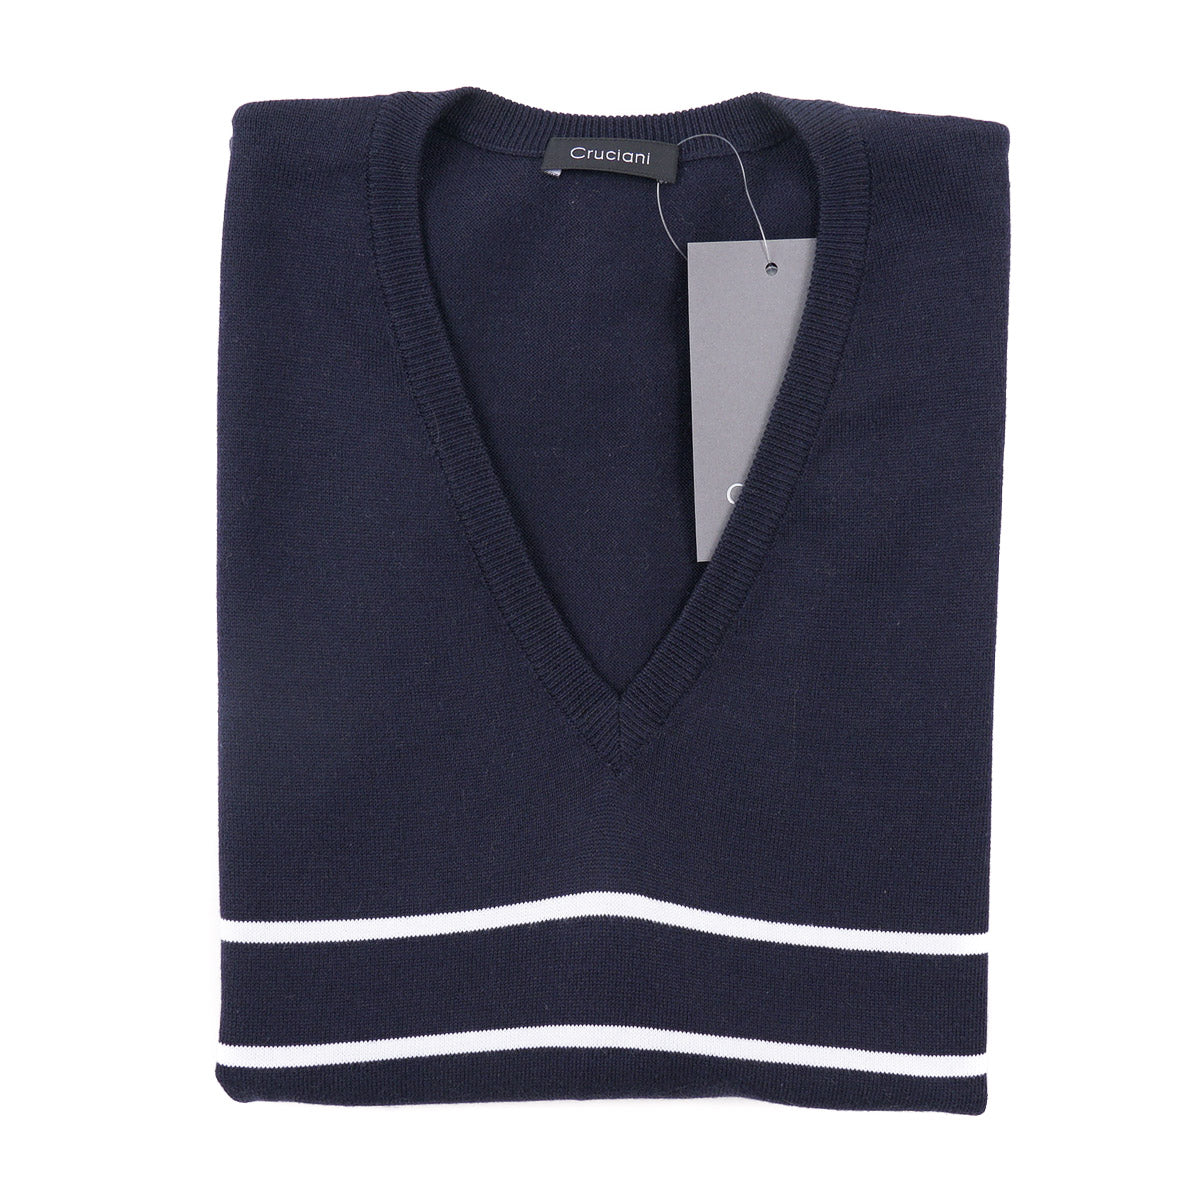 Cruciani Breton Stripe Merino Wool Sweater Vest - Top Shelf Apparel